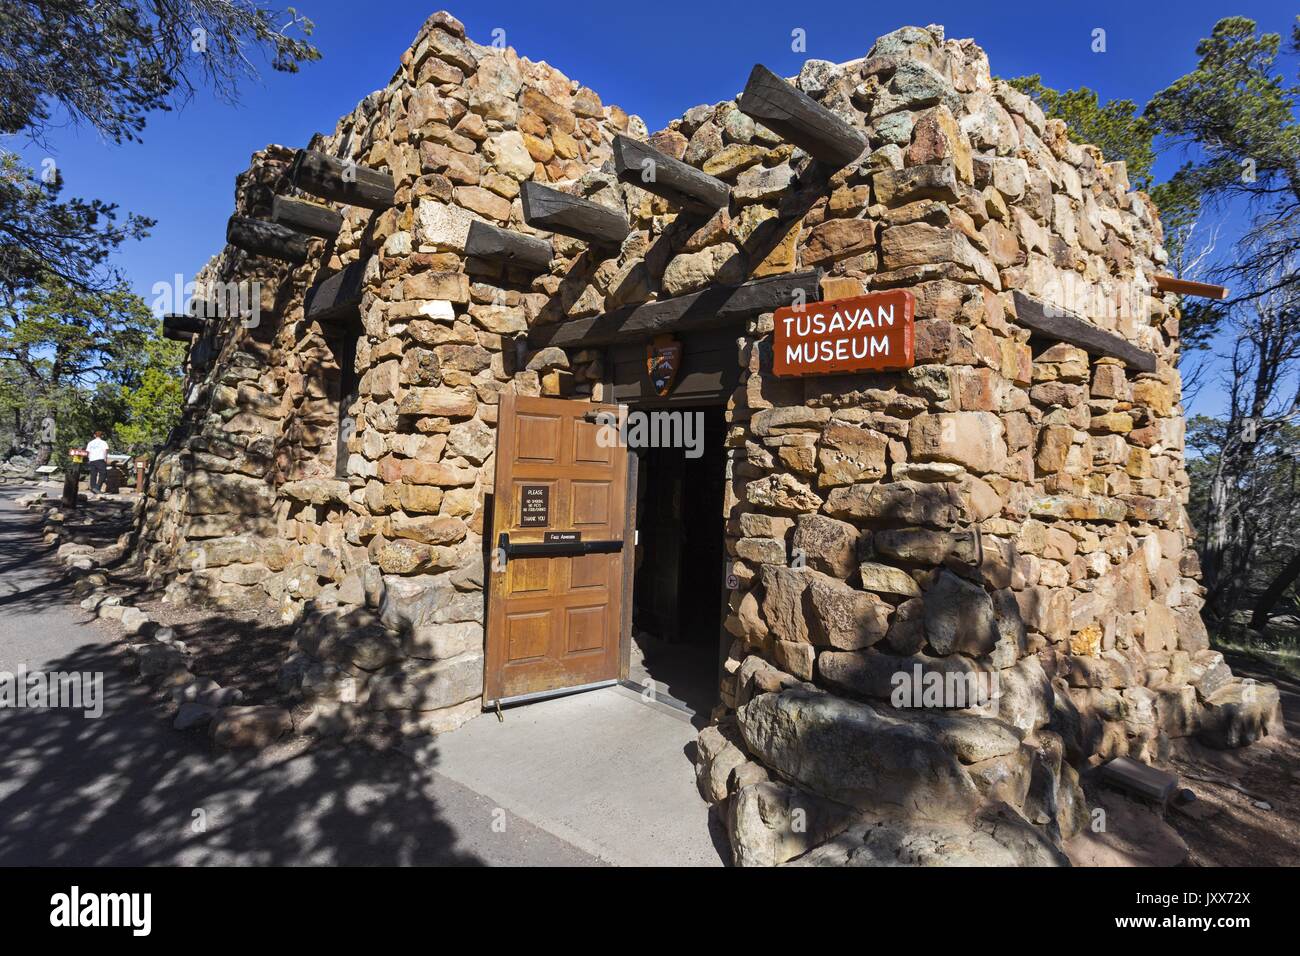 Tusayan Museum Stone Rock Structure Entrance. Grand Canyon National Park Service South Rim Arizona, United States Stock Photo